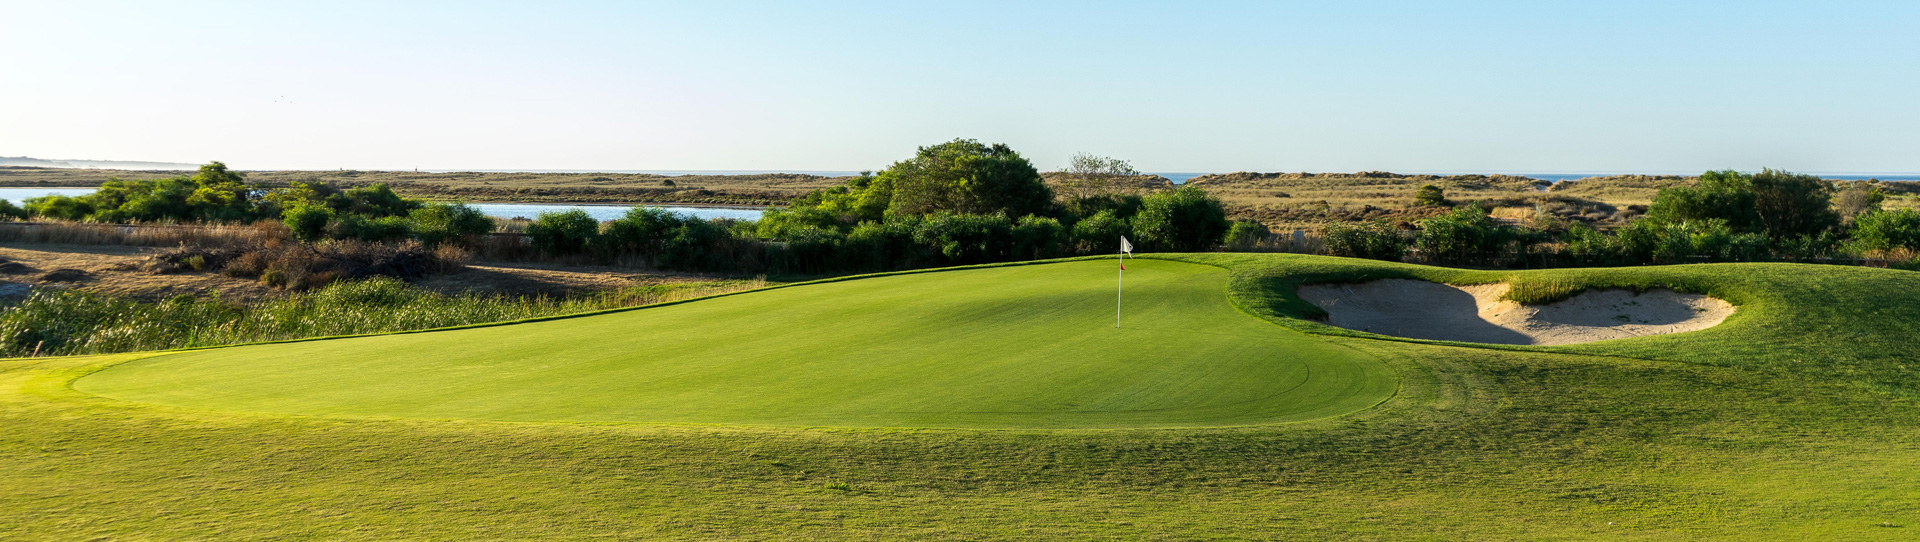 Portugal golf courses - Palmares Golf Course - Photo 2